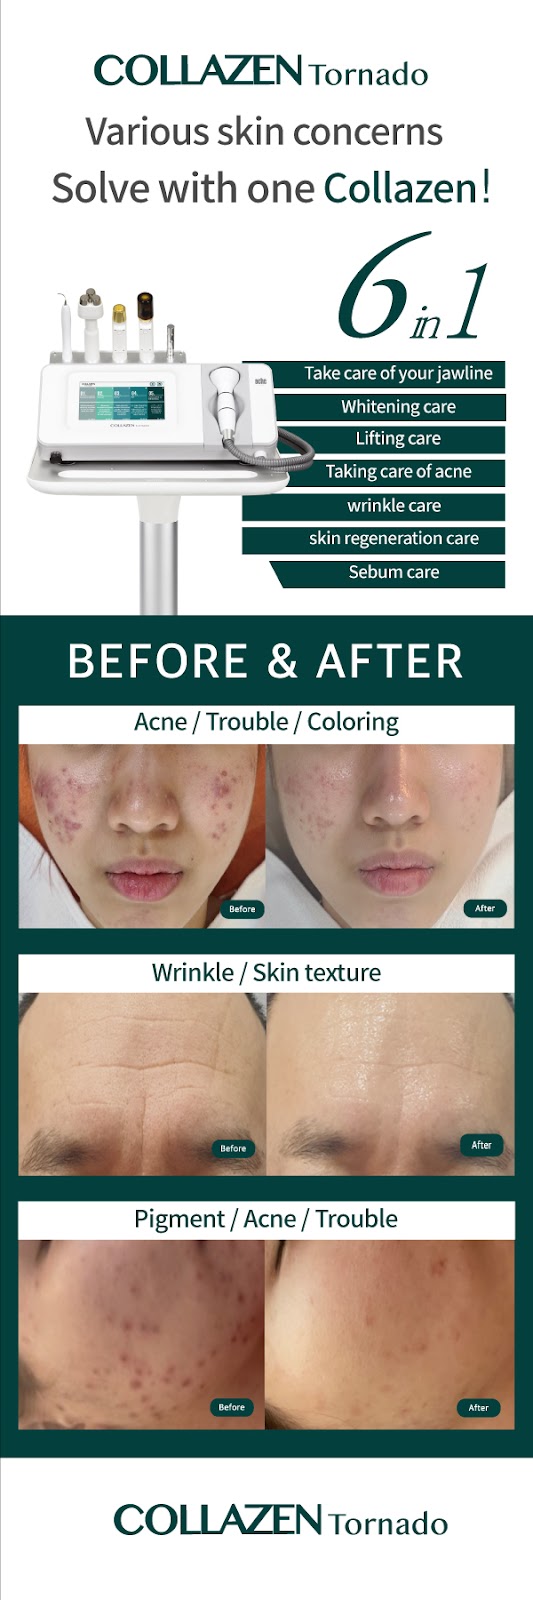 R. O. Beauty Skin Care | Inside Tracy Beauty Salon, 657 Grape Ave, Sunnyvale, CA 94087 | Phone: (408) 455-0787